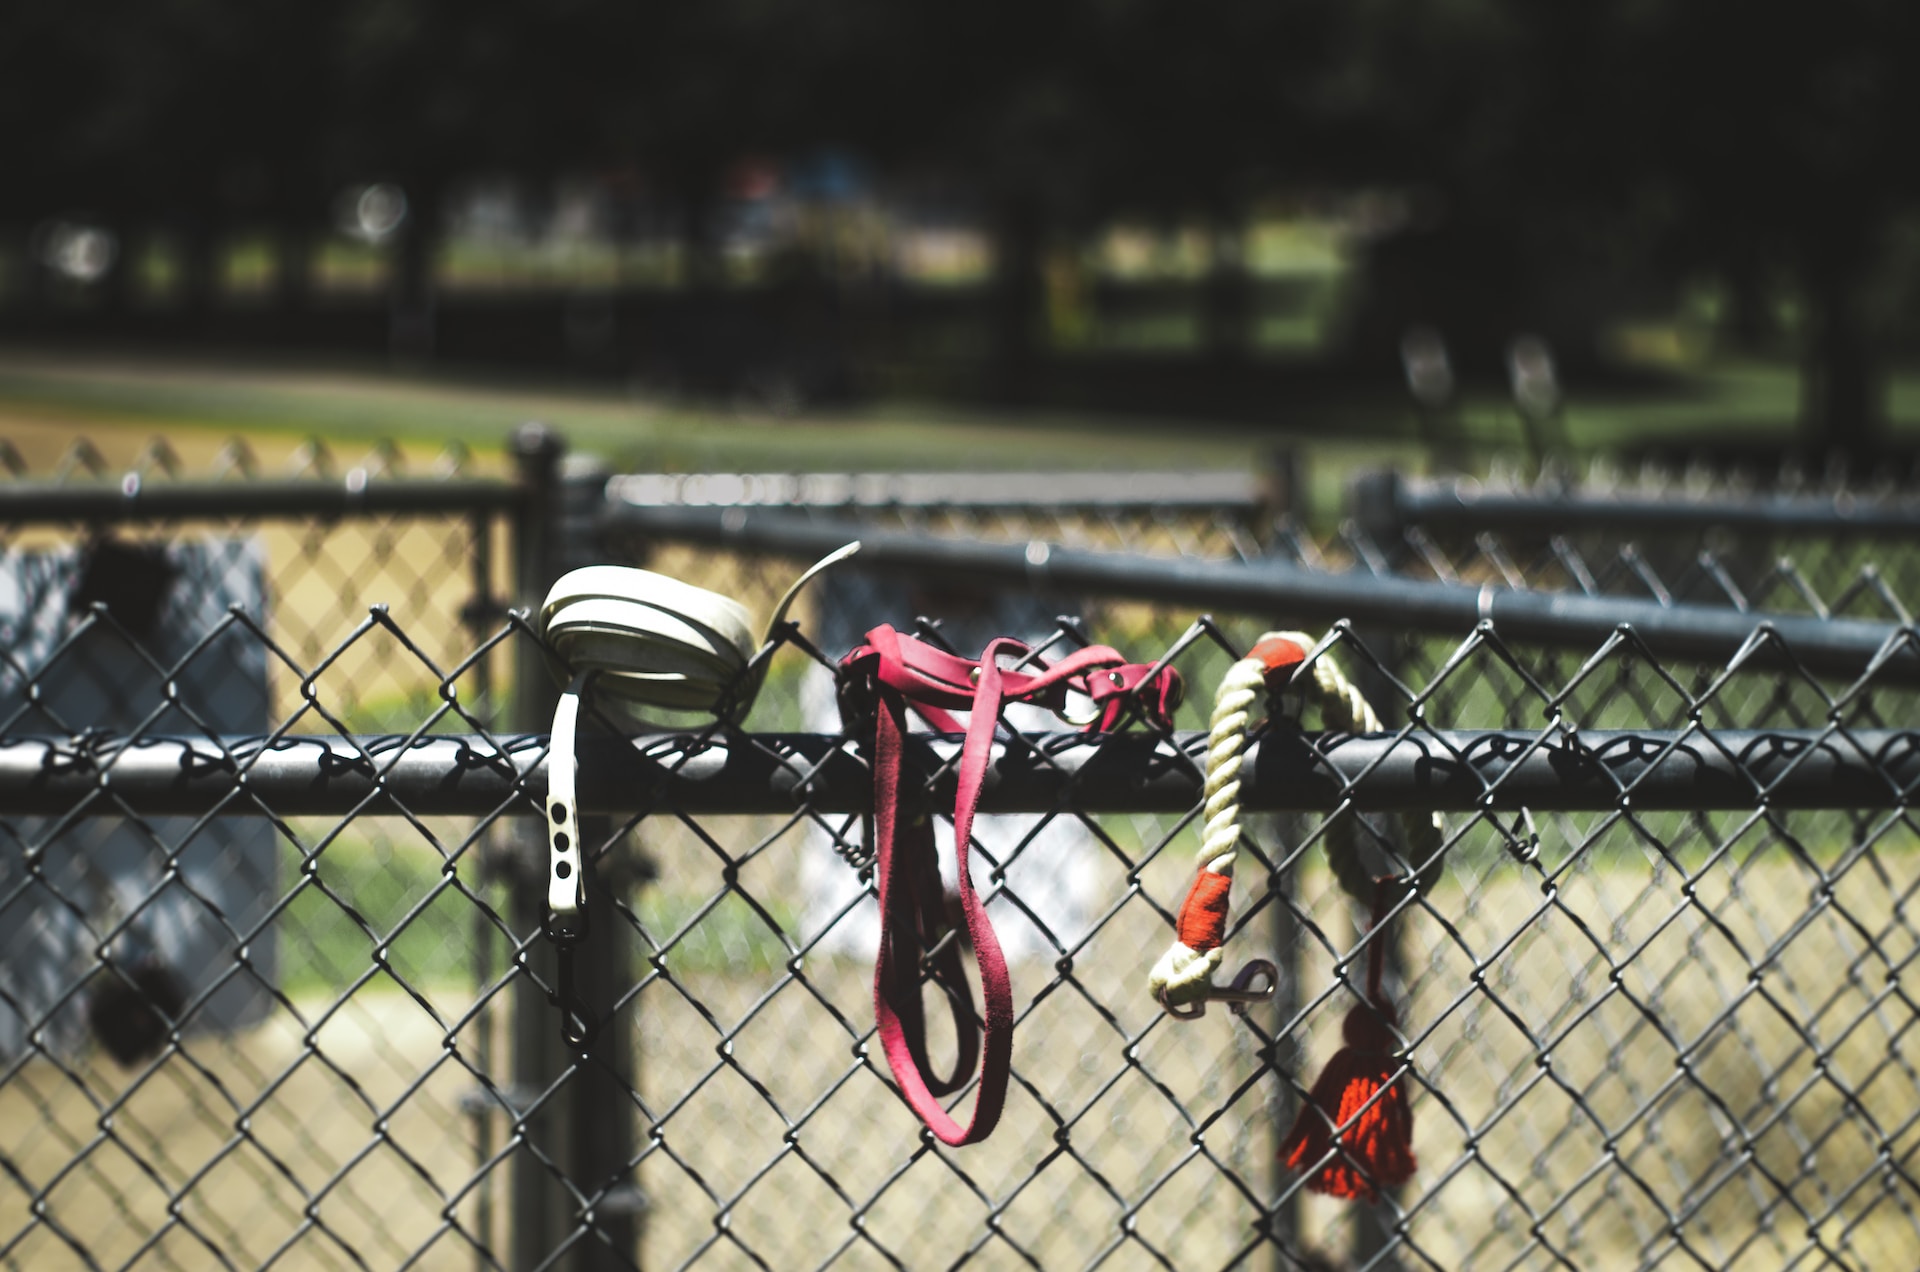 leashes on a fence - Missoula leash laws